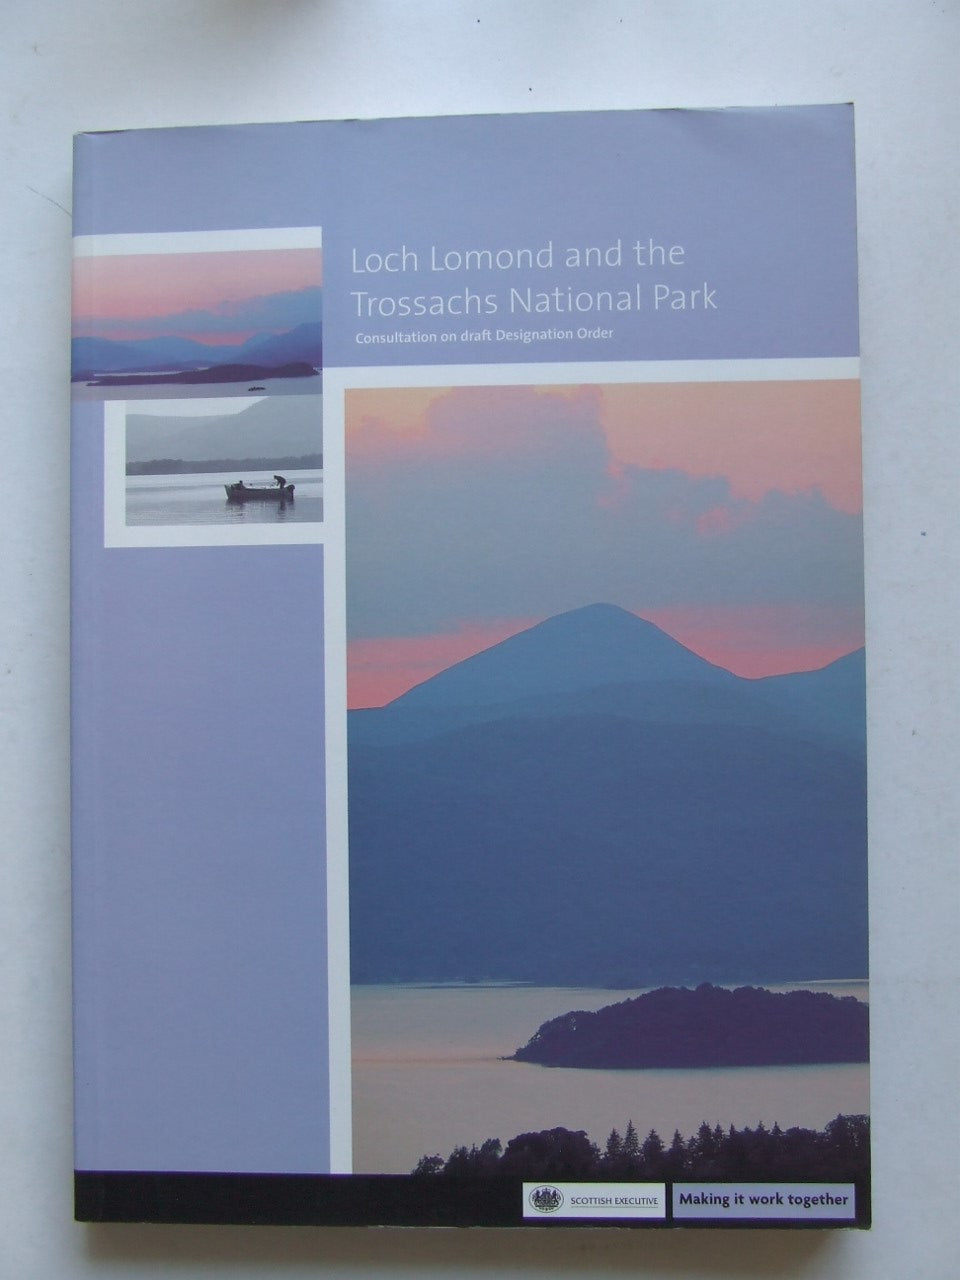 Loch Lomond and the Trossachs National Park, consultation on draft designation order